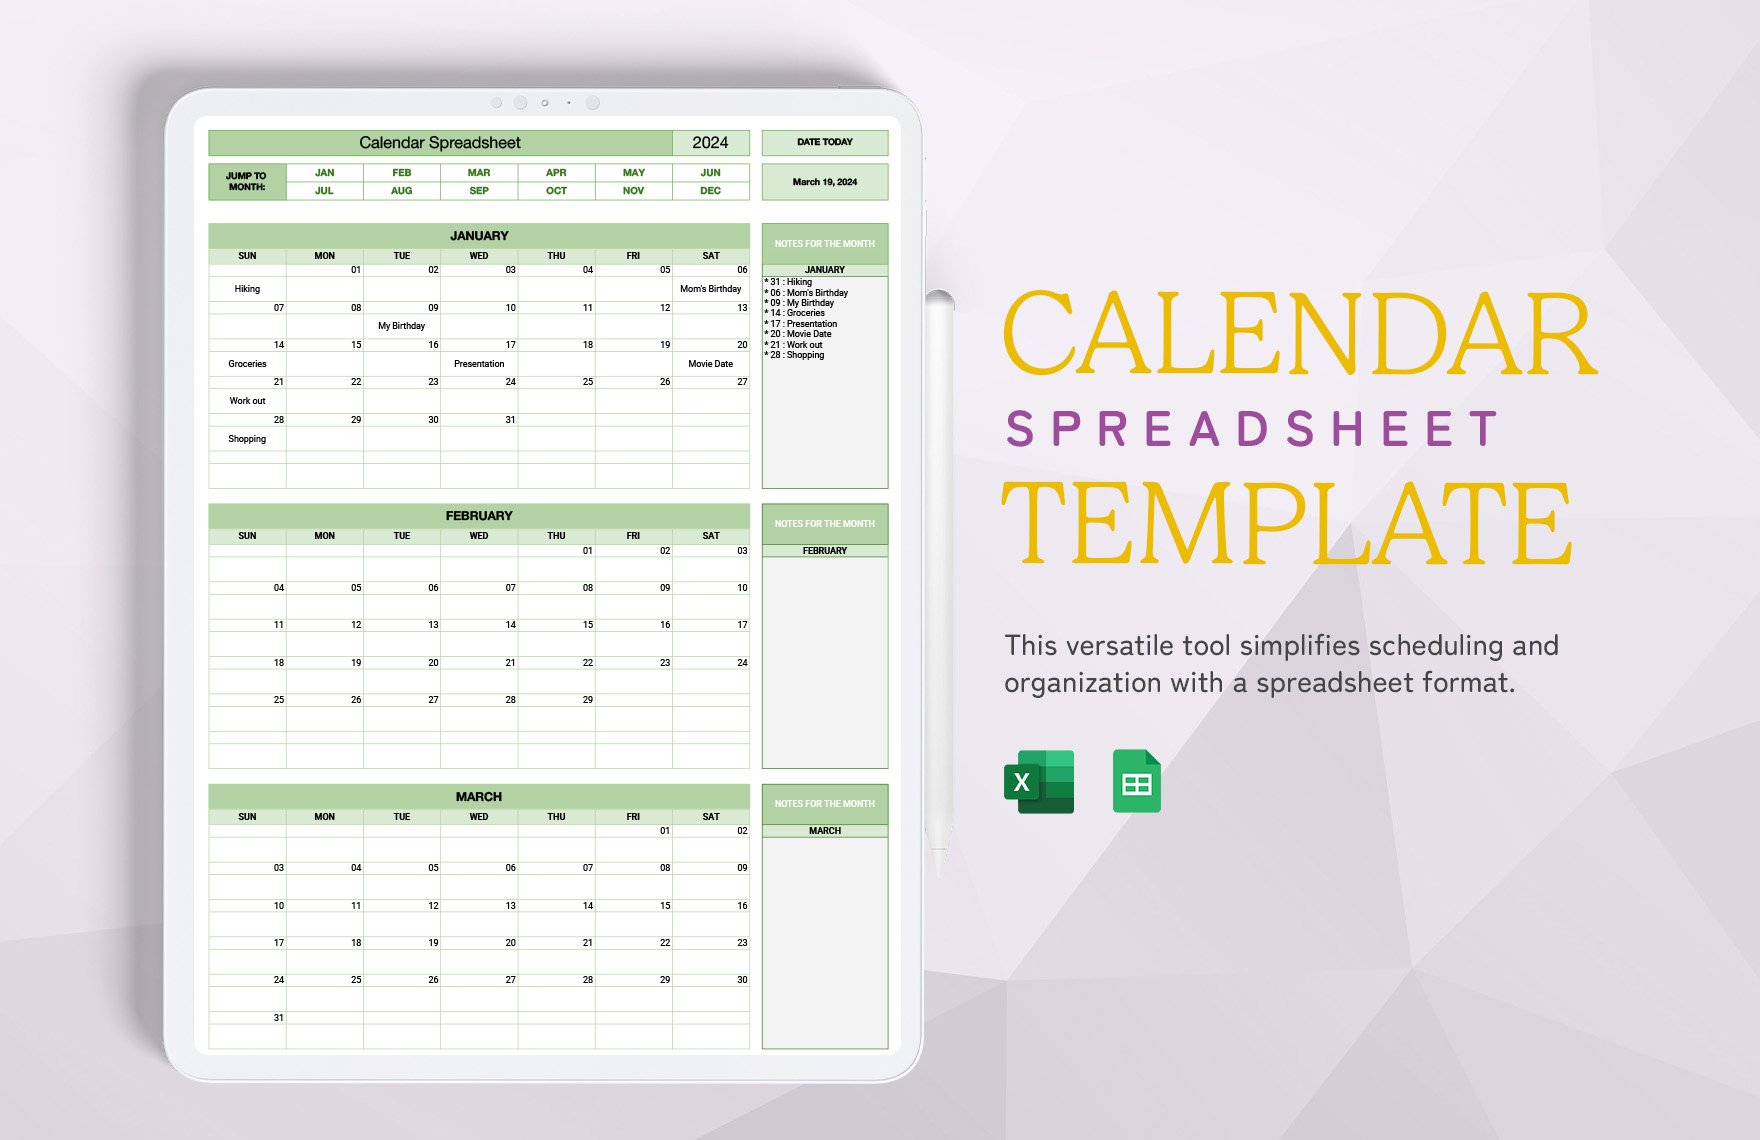 Calendar Spreadsheet Template in Excel Google Sheets Download